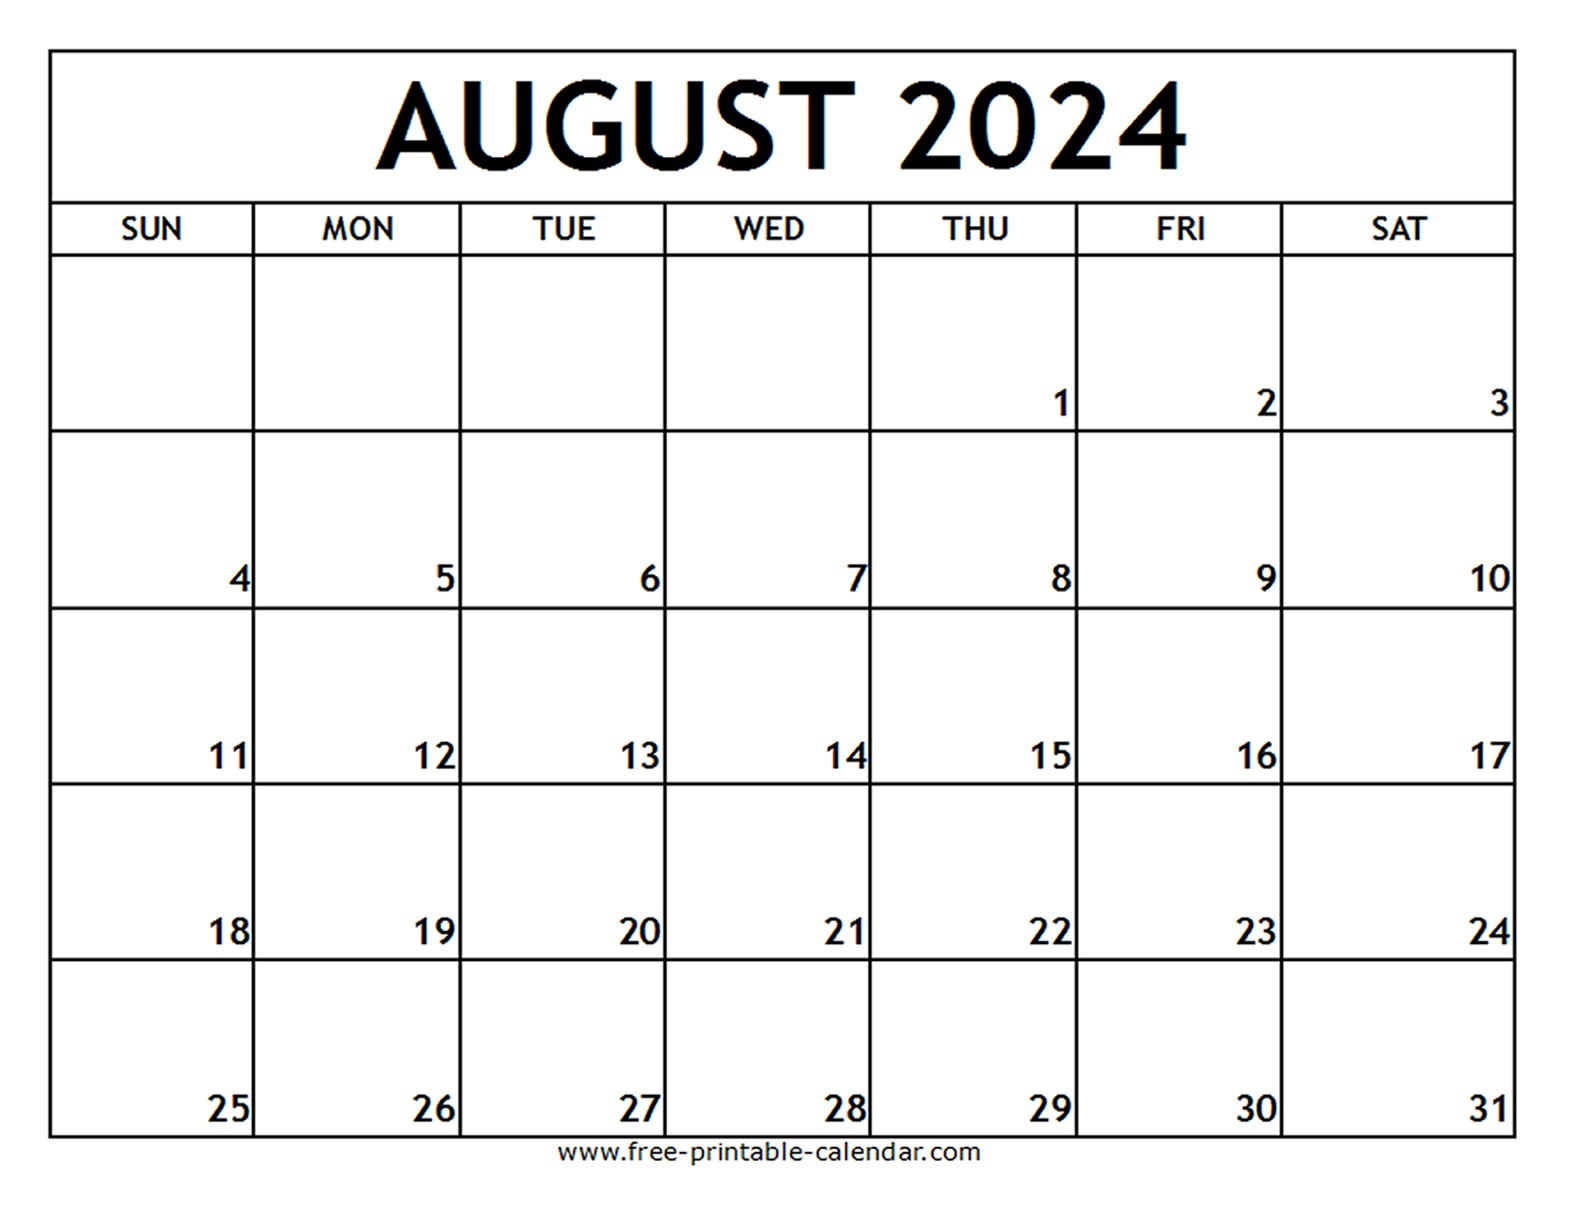 August 2024 Printable Calendar - Free-Printable-Calendar pertaining to Free Printable August 2024 Monthly Calendar